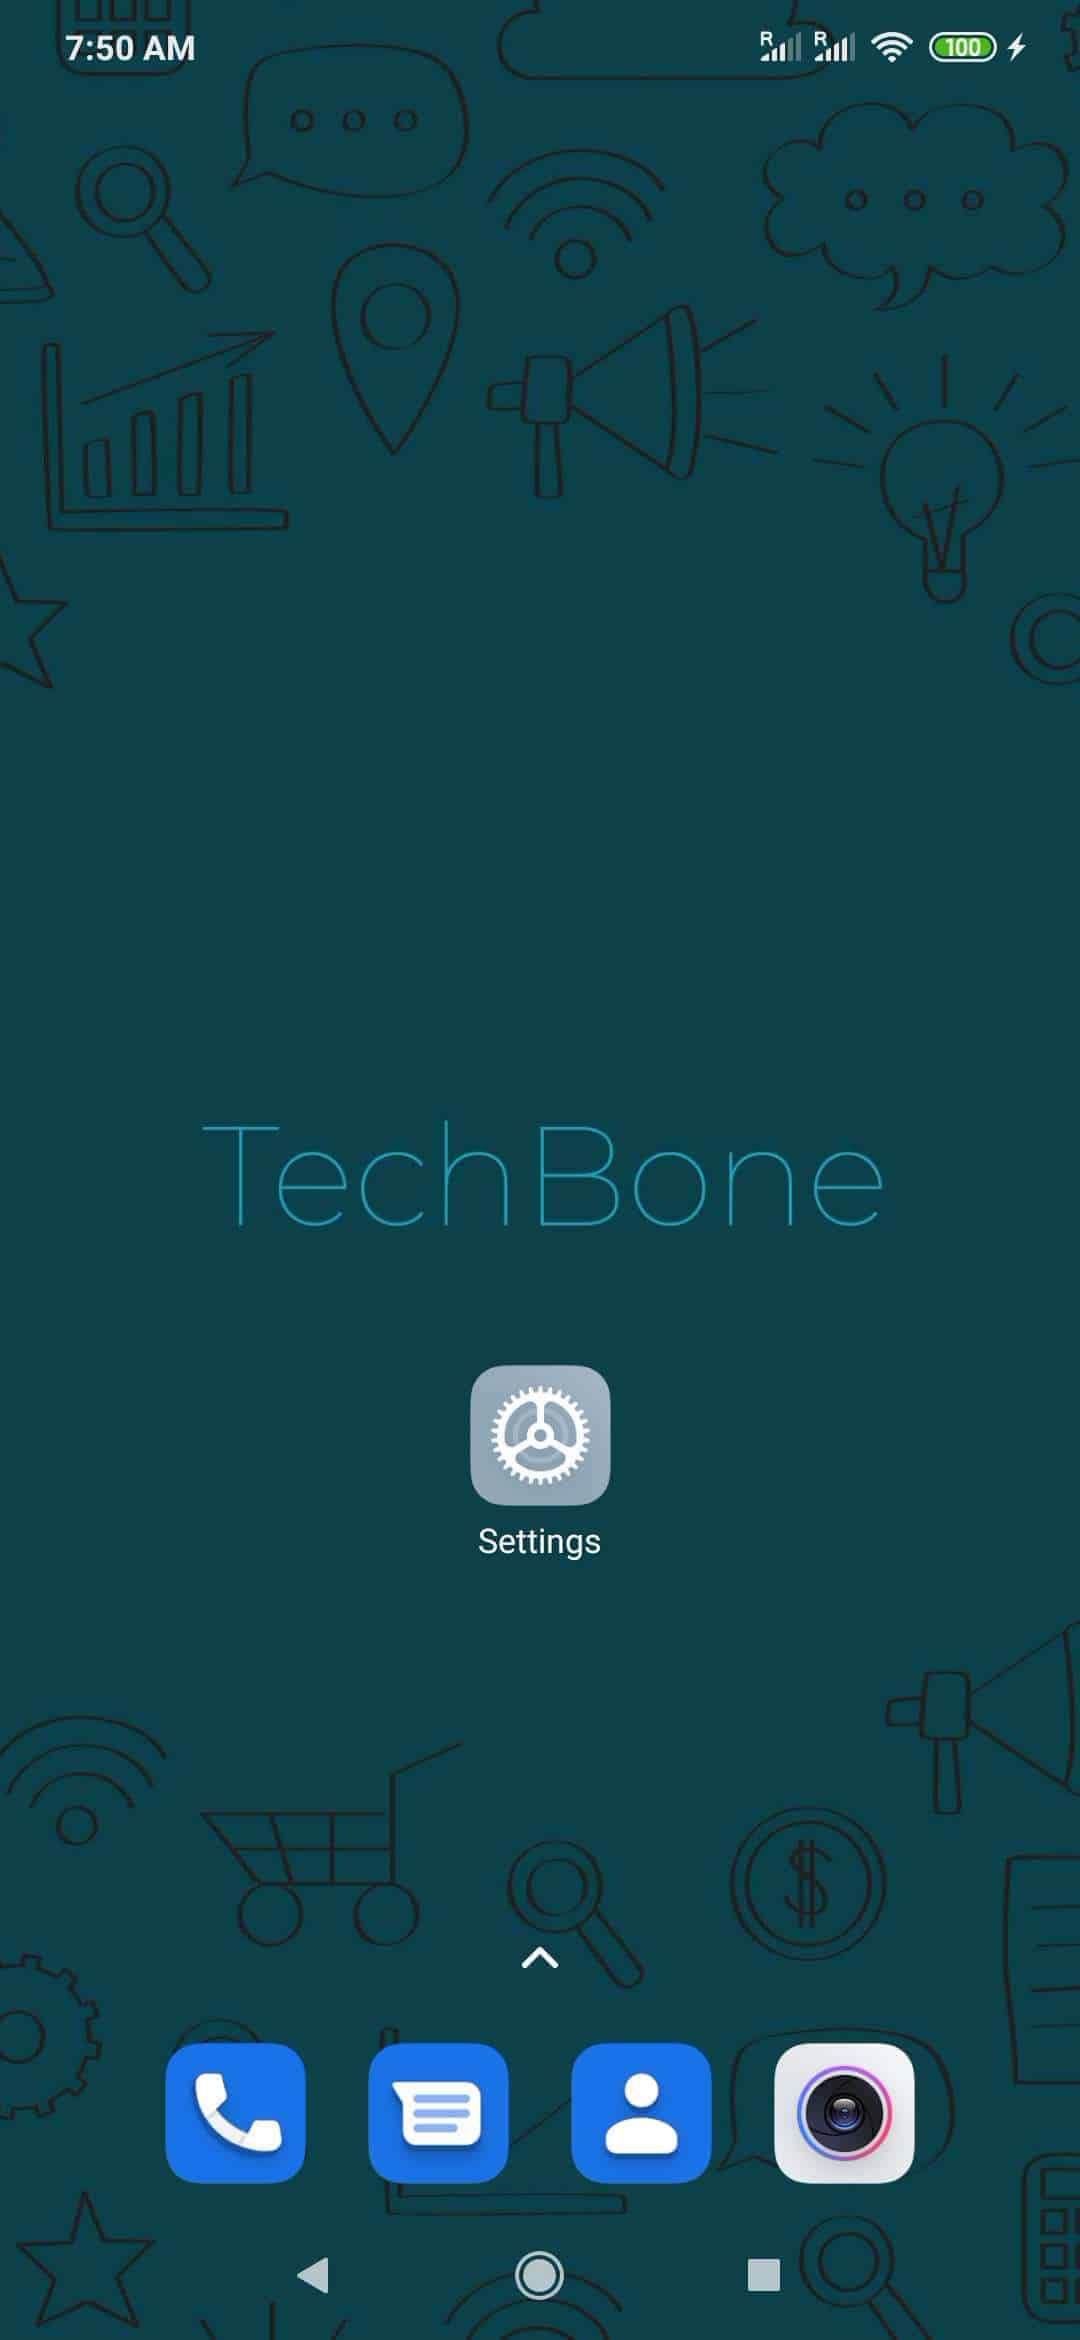 Change theme of home screen or lock screen - Xiaomi Manual | TechBone